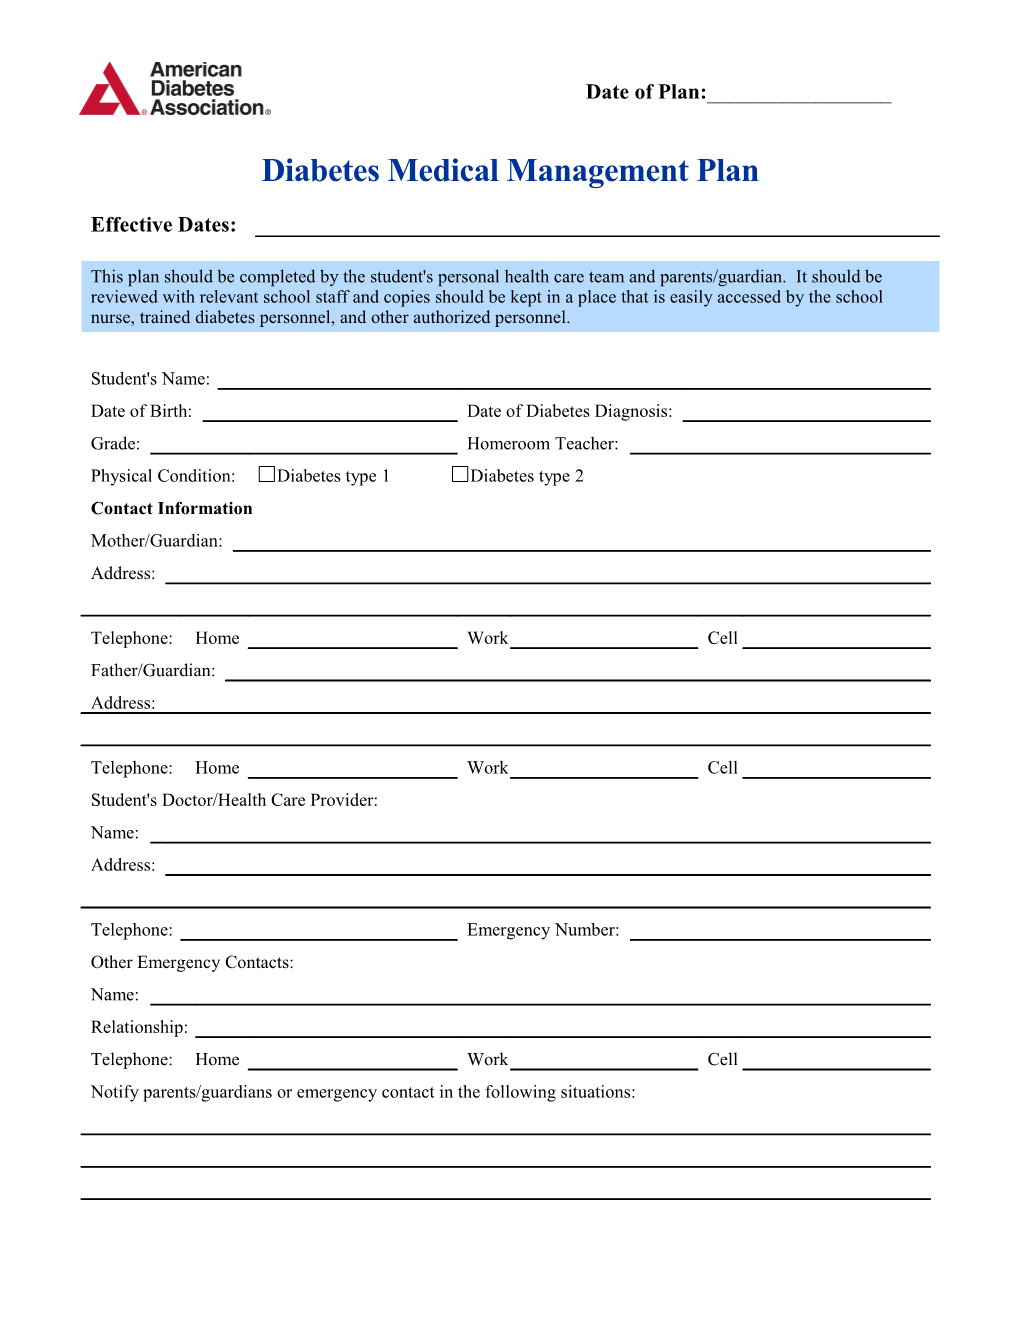 Diabetes Medical Management Plan Continued 1